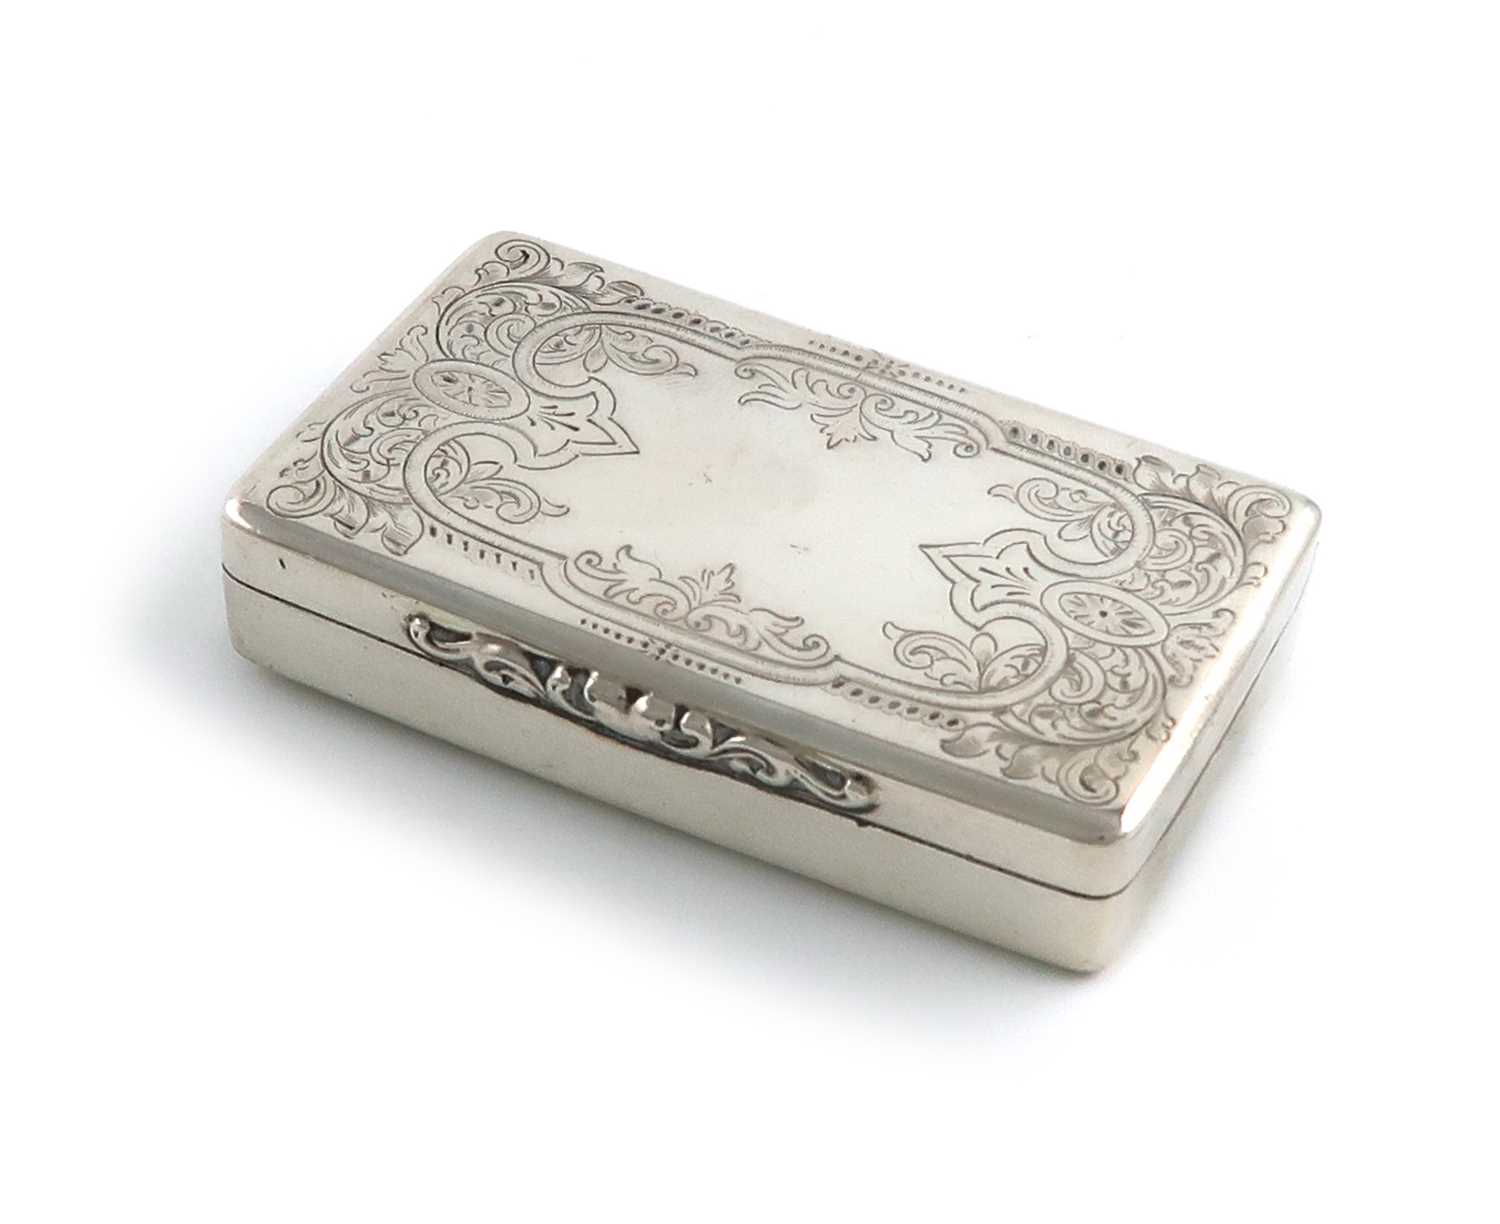 A Victorian silver snuff box, by George Unite, Birmingham 1886, rectangular form, engraved